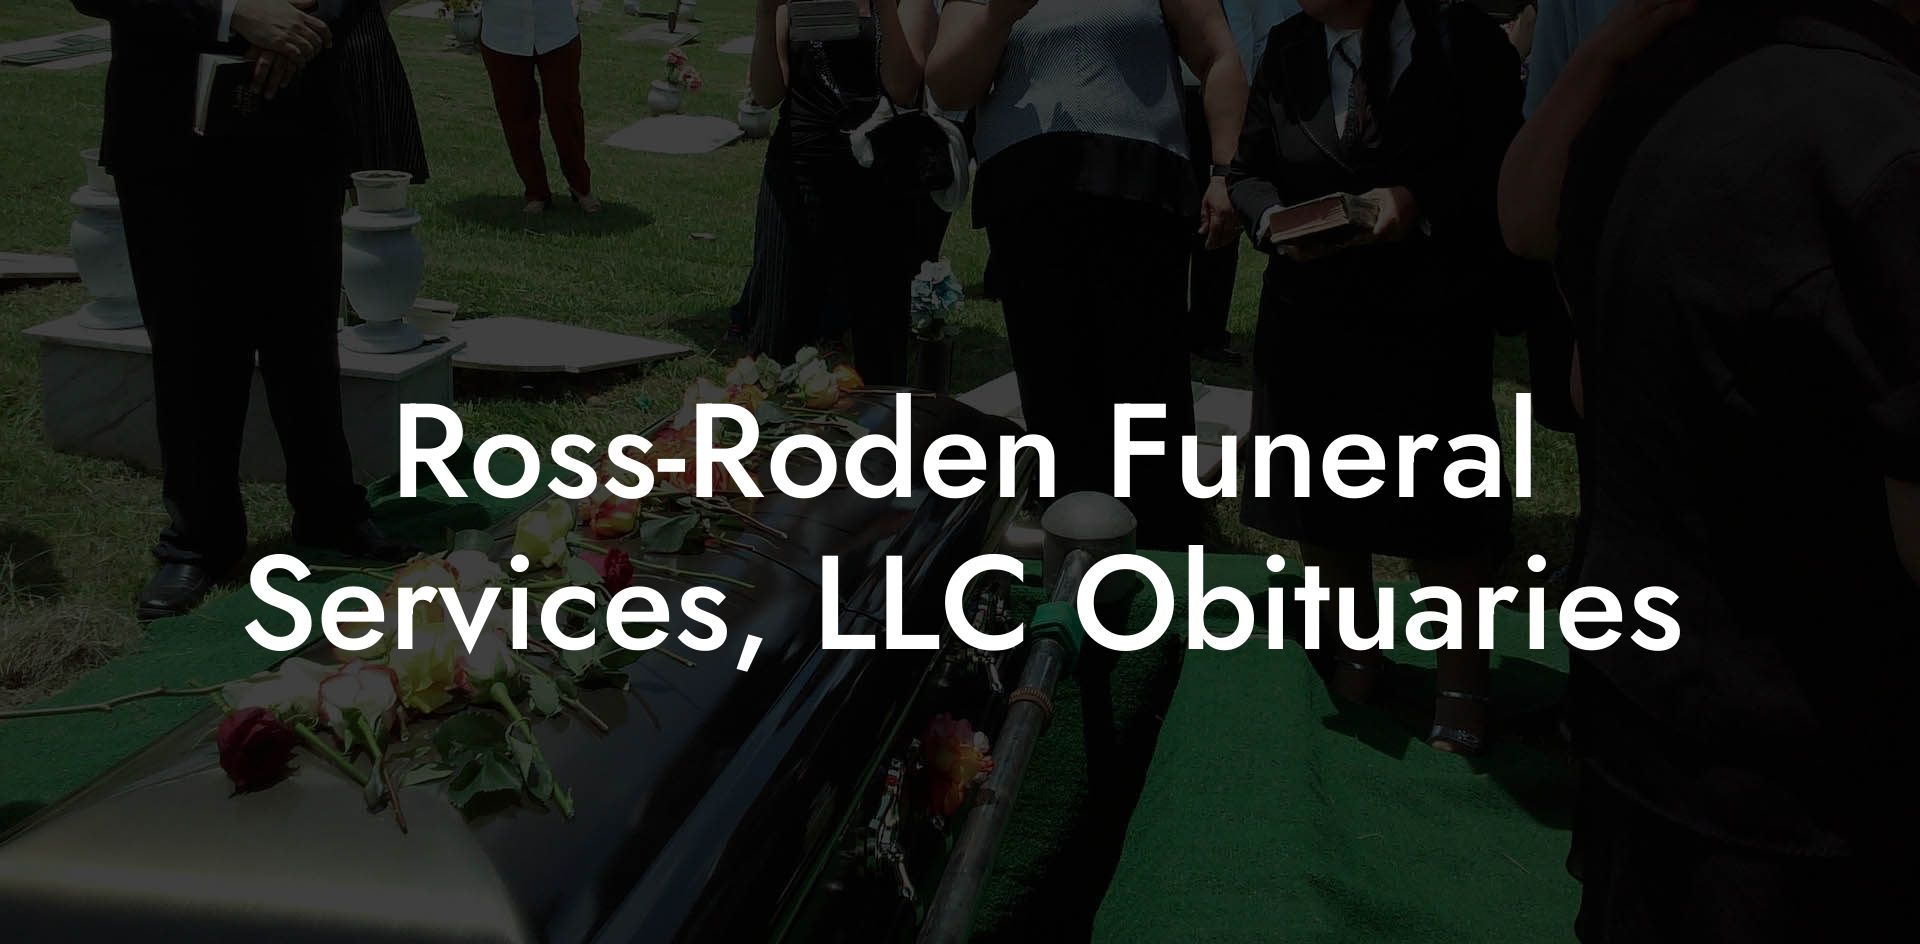 Ross-Roden Funeral Services LLC Obituaries